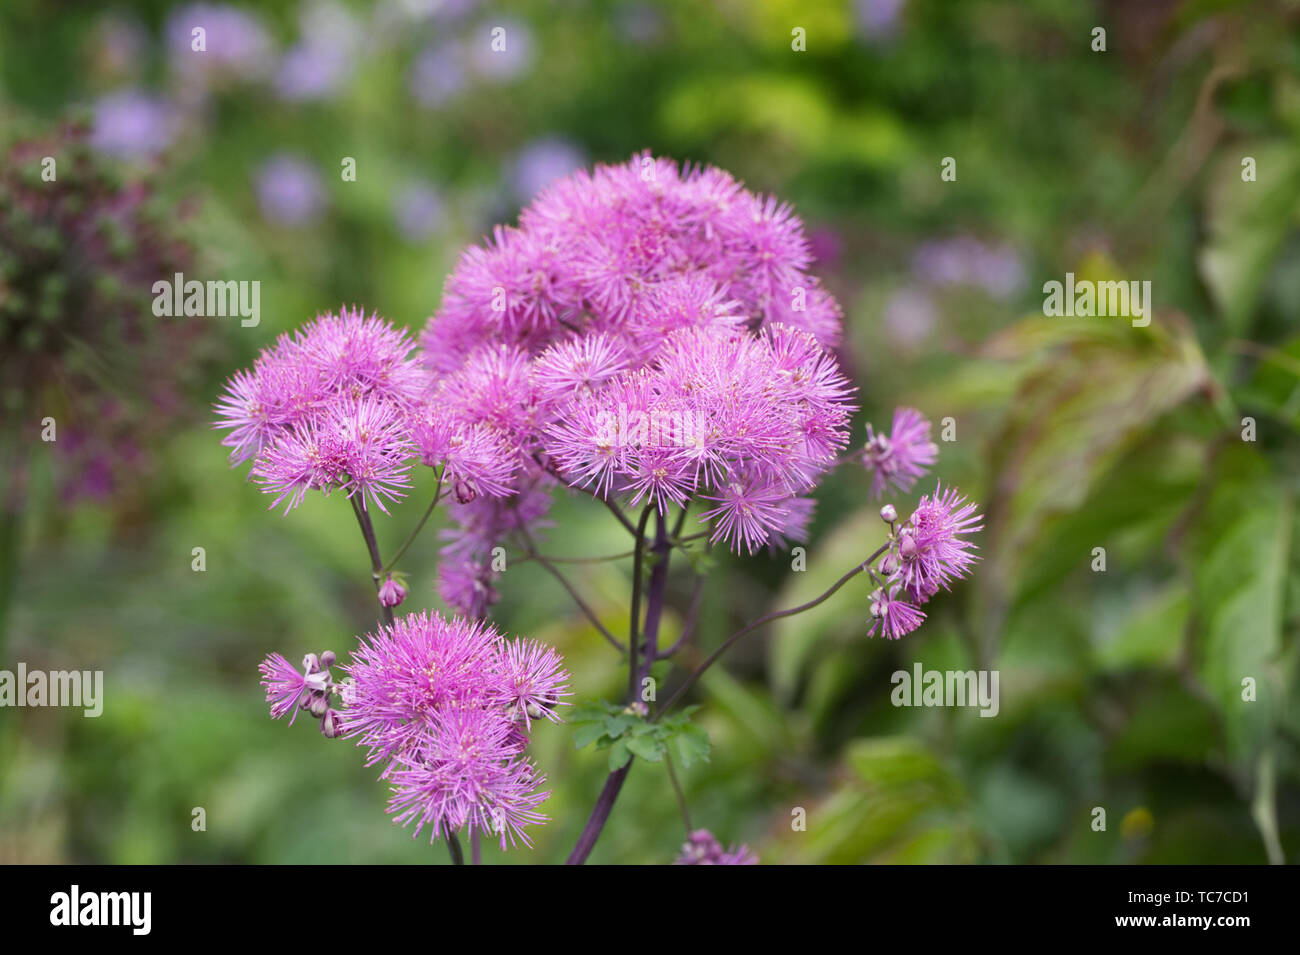 Thalictrum aquilegiifolium flowers in a cottage garden. Stock Photo